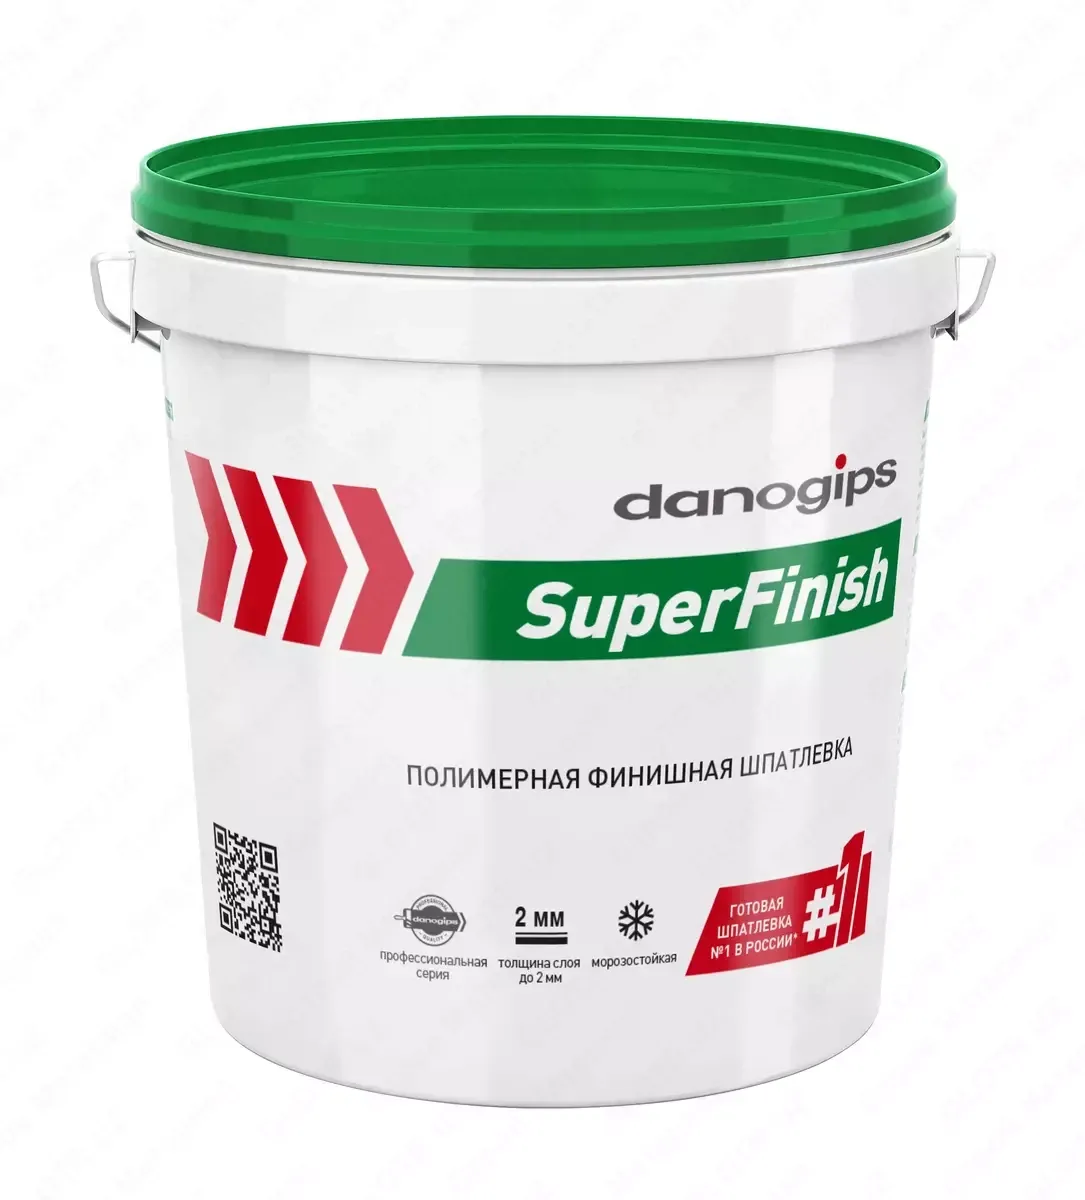 SuperFinish polimer shlakli 28 kg DANOGIPS#1